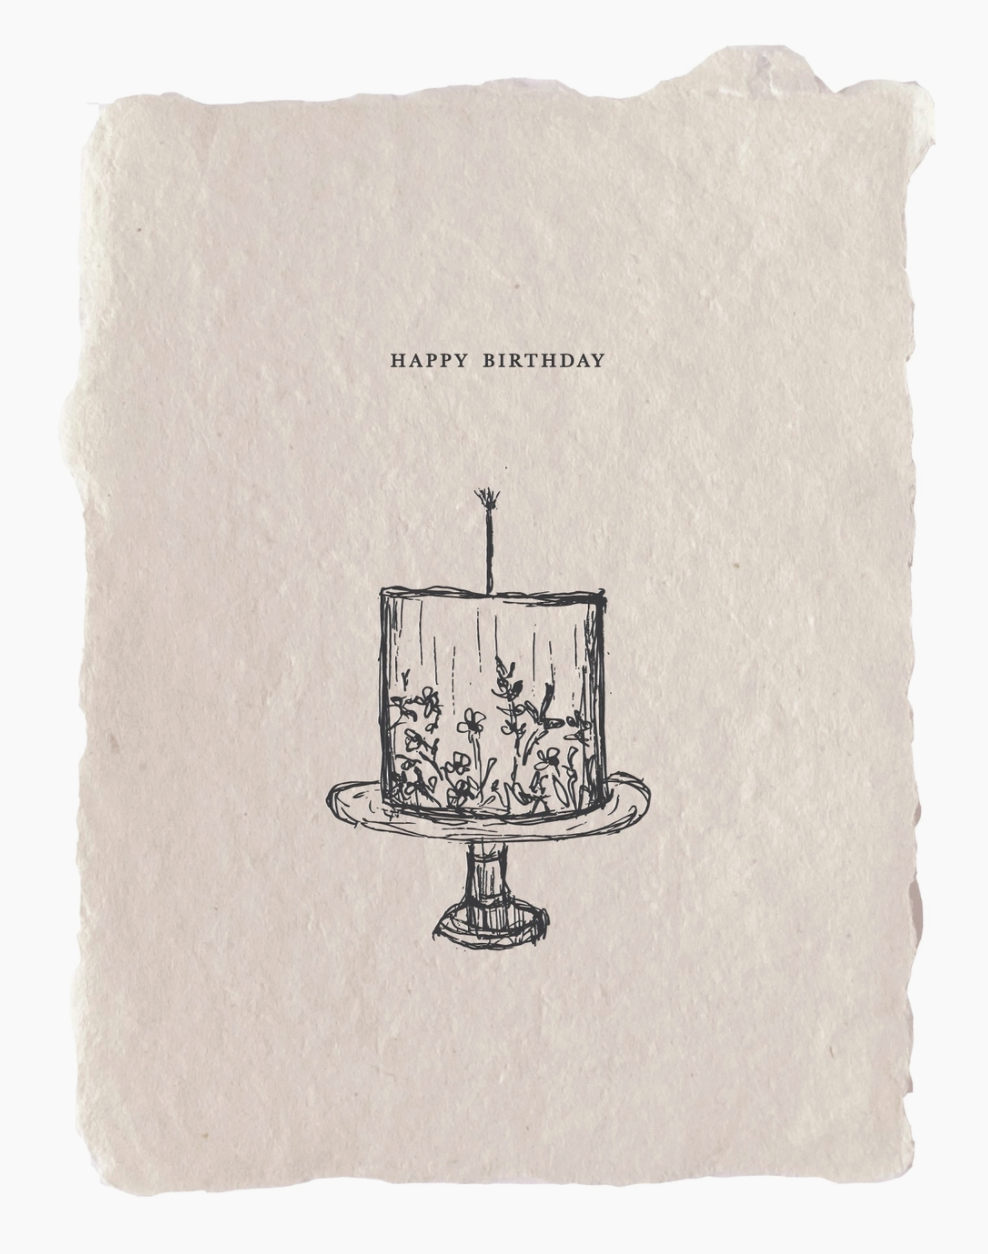 Happy birthday cake greeting card | Handmade birthday card